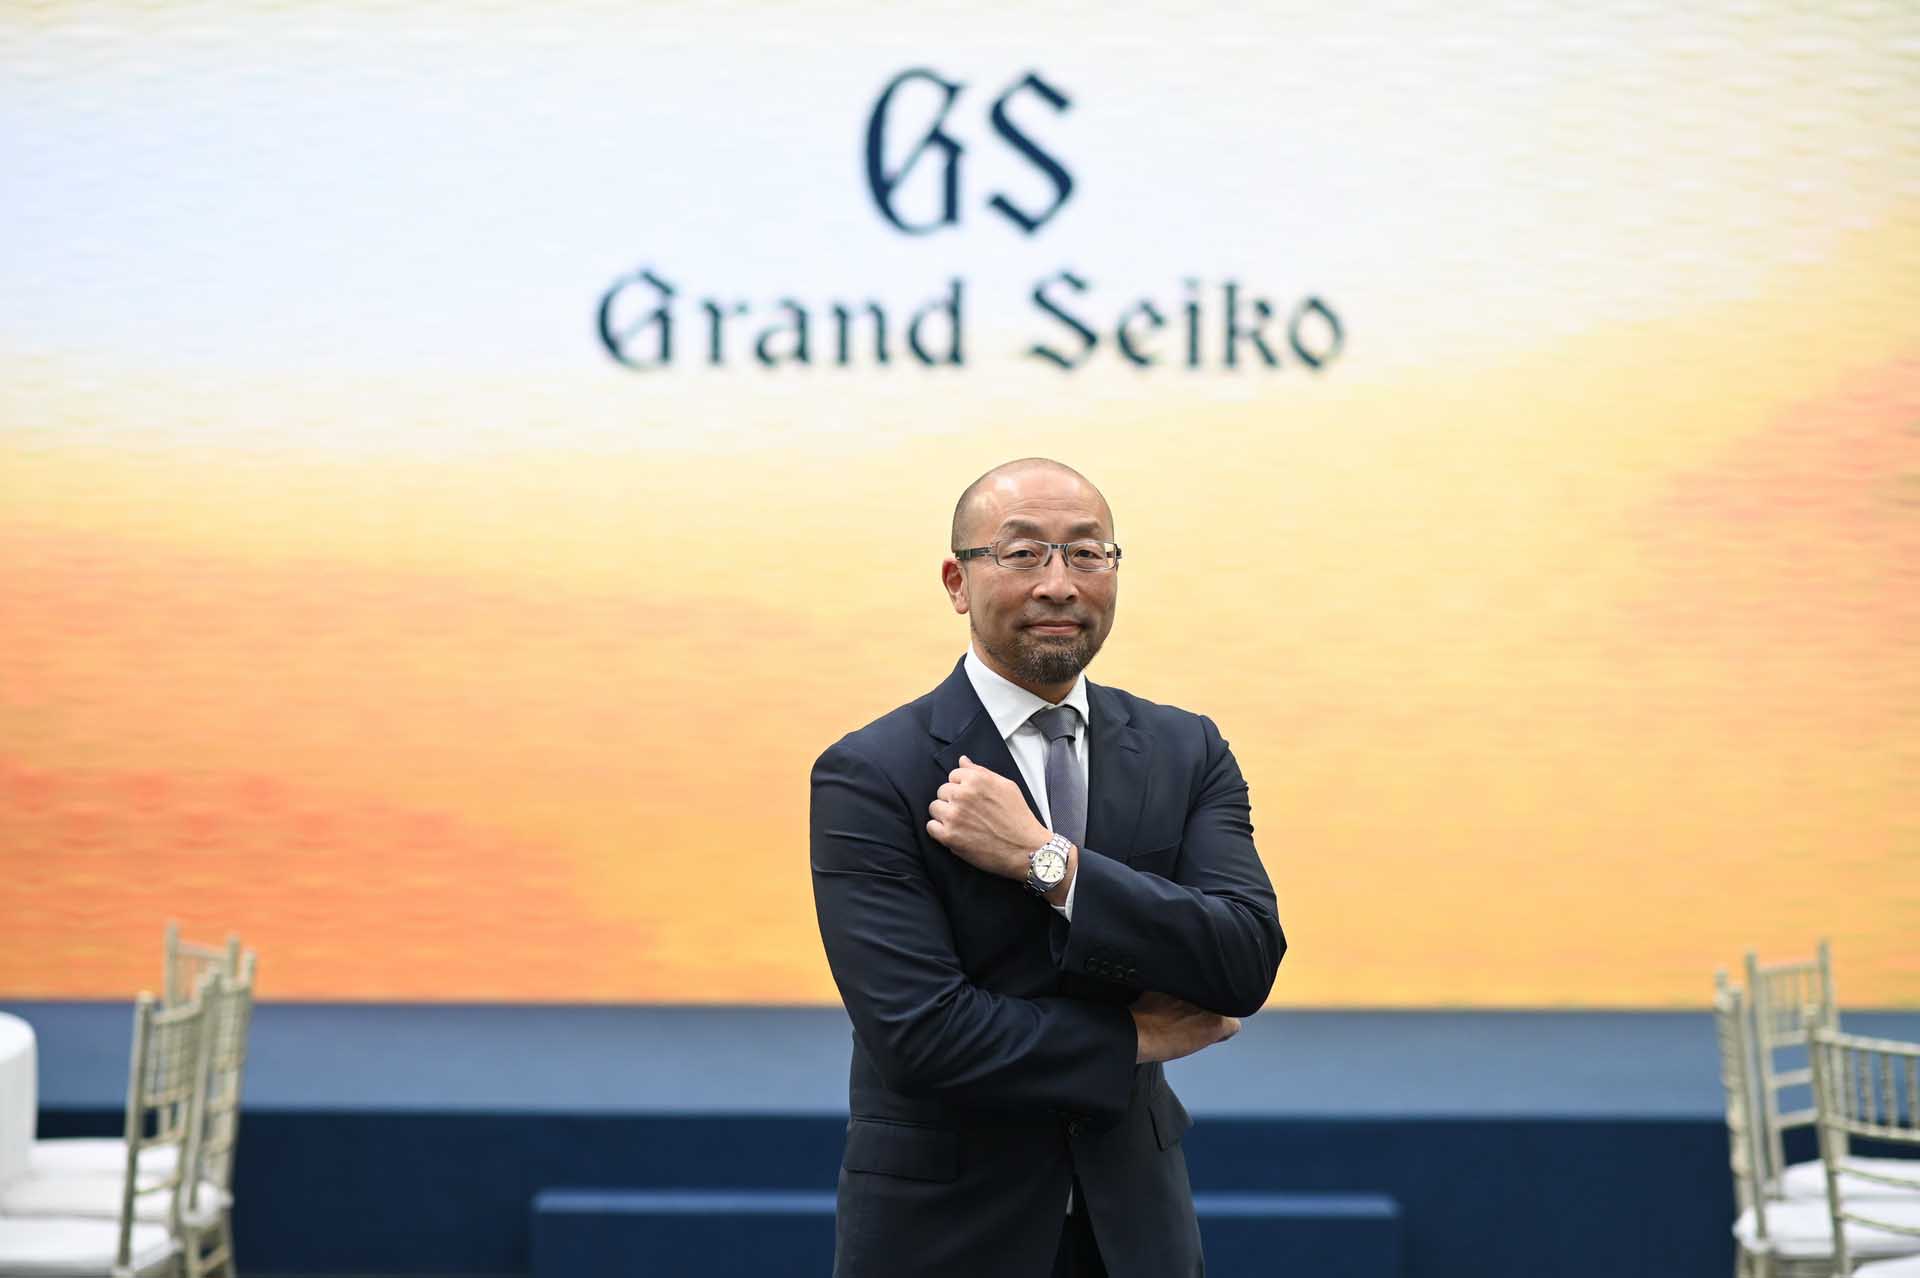 Grand Seiko Thai edition